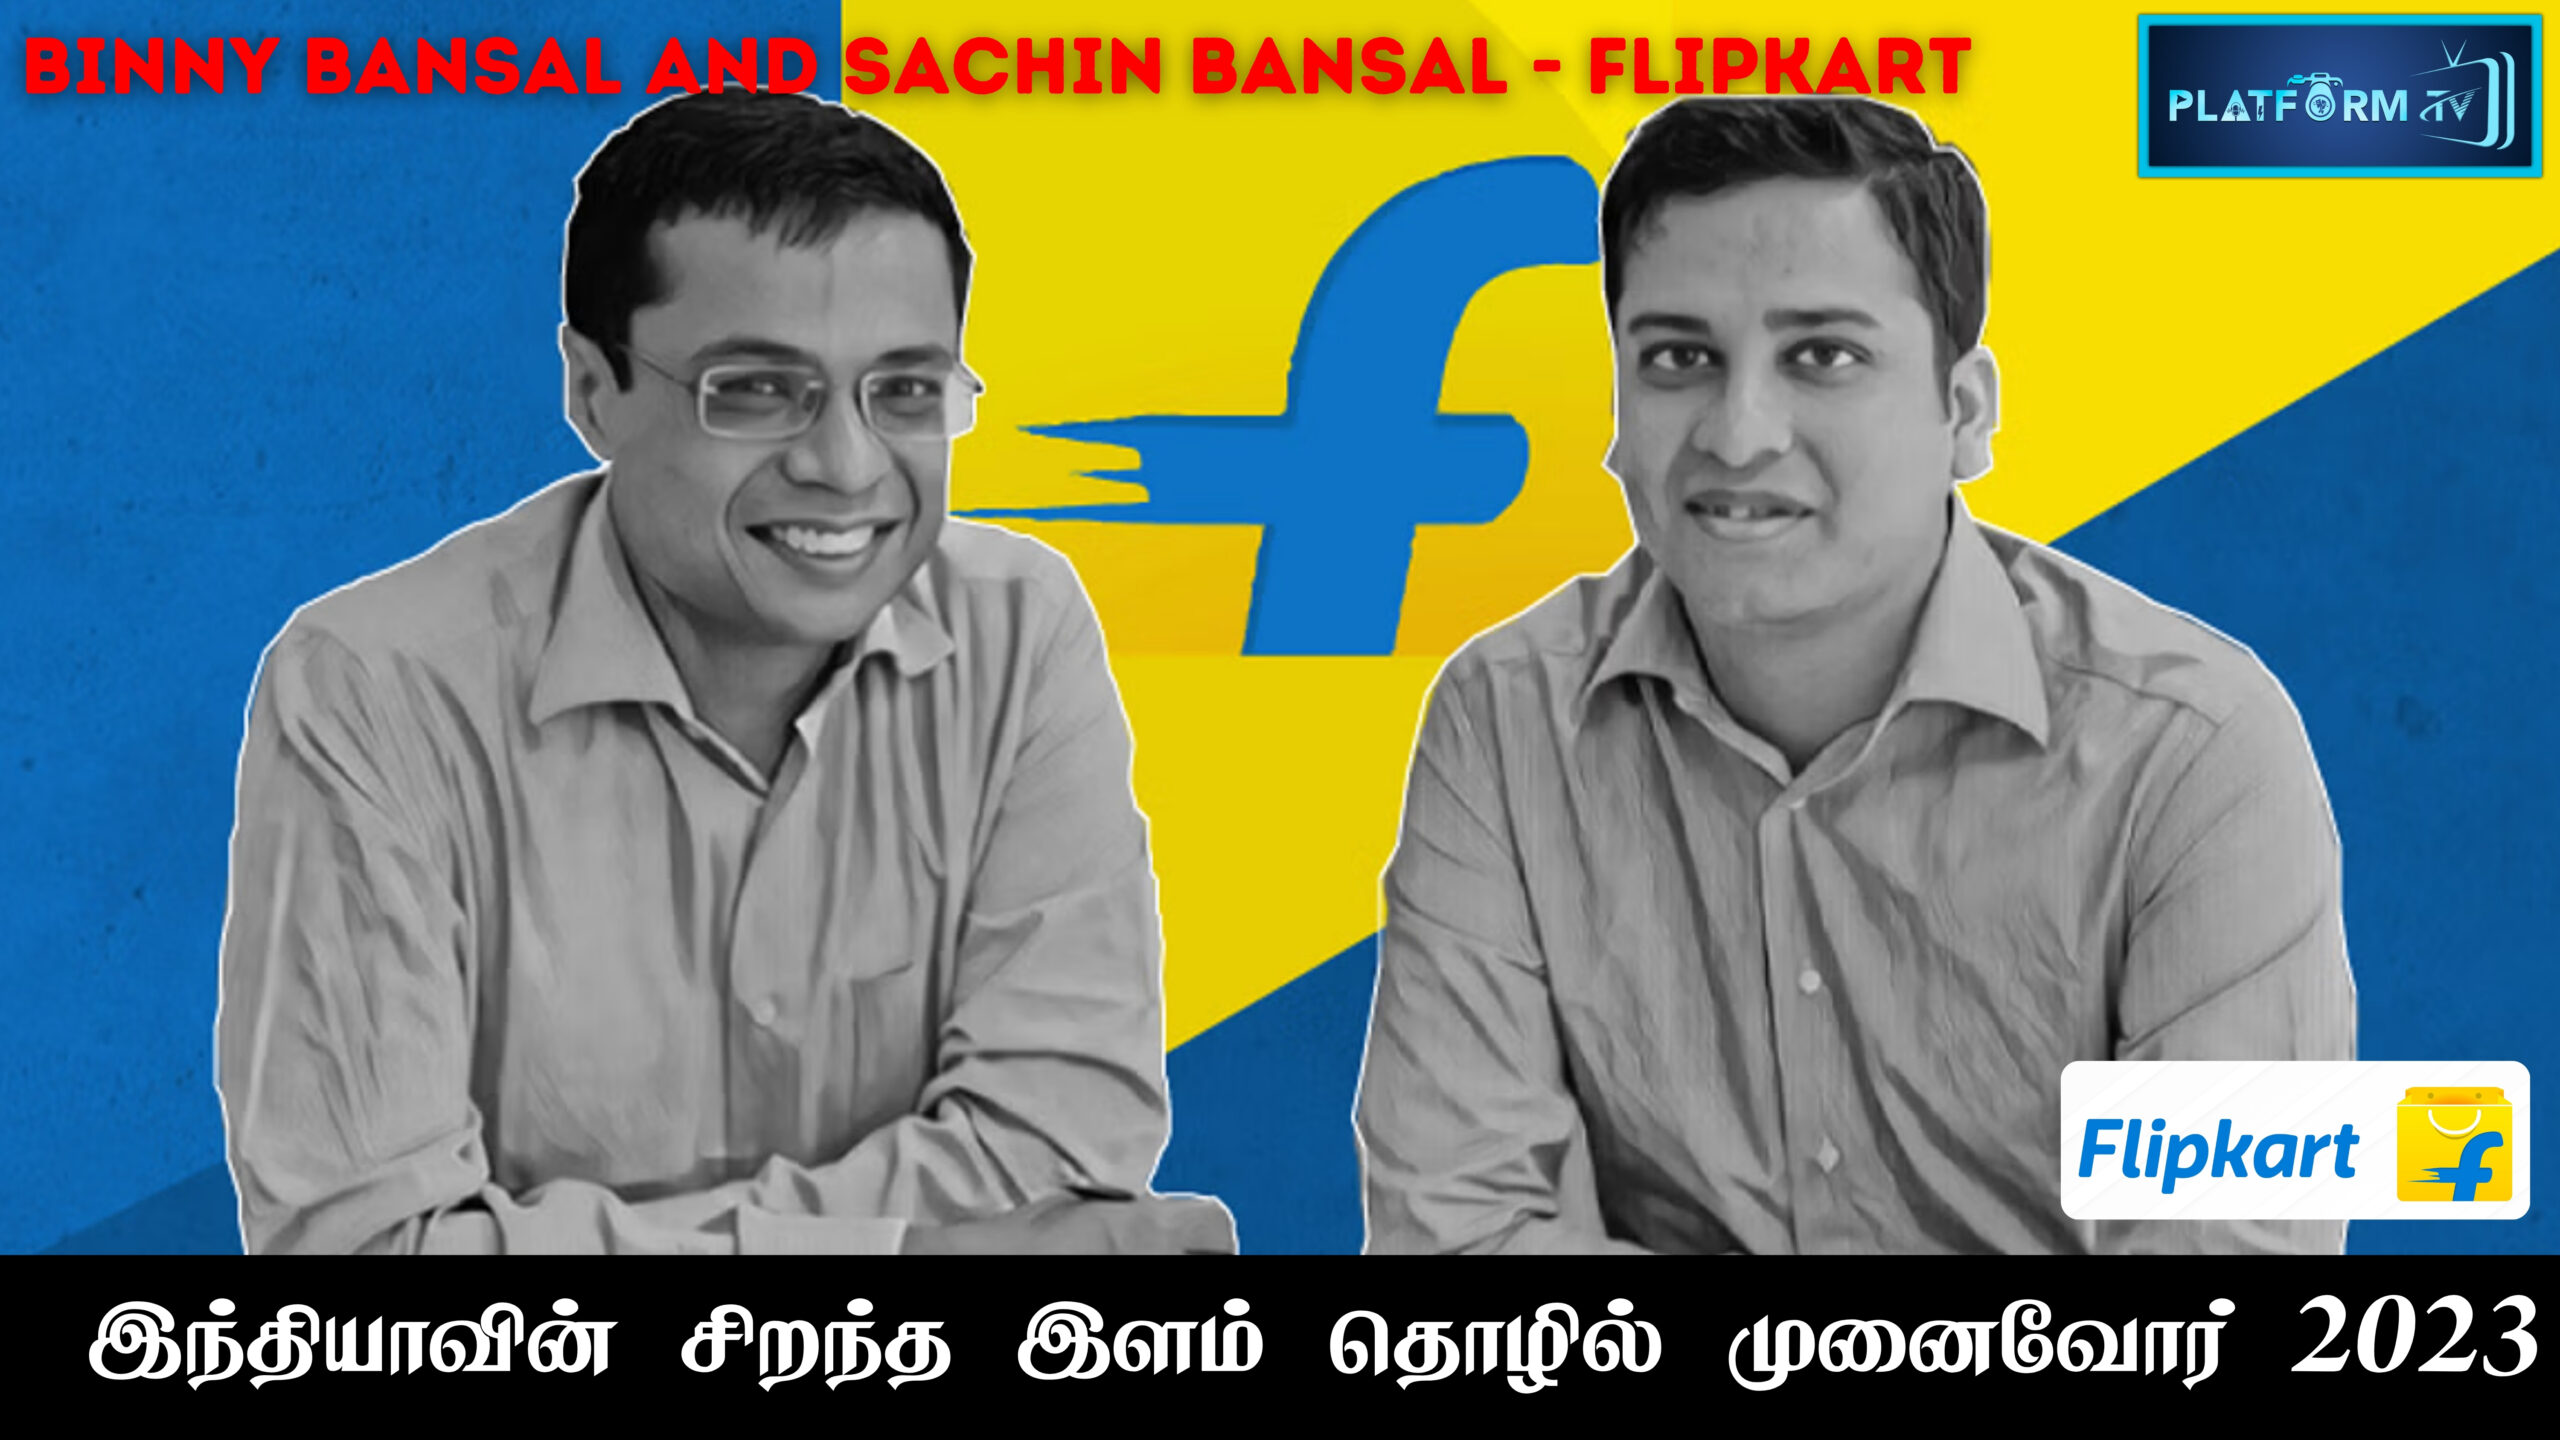 Flipkart Founder - Platform Tamil